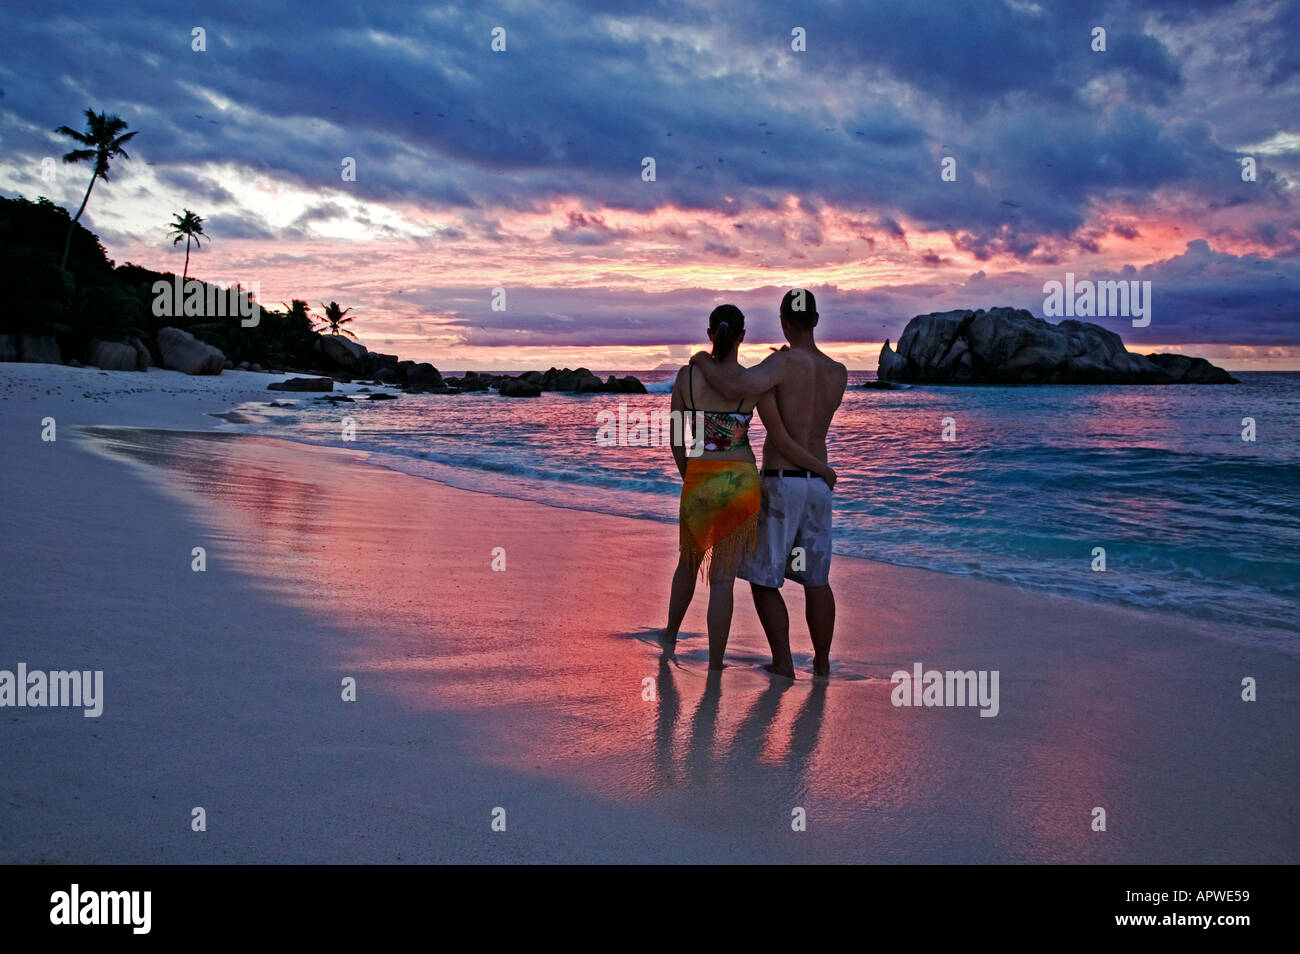 Menschen am Strand bei Sonnenuntergang Modell freigegeben Seychellen Cousine Island Stockfoto